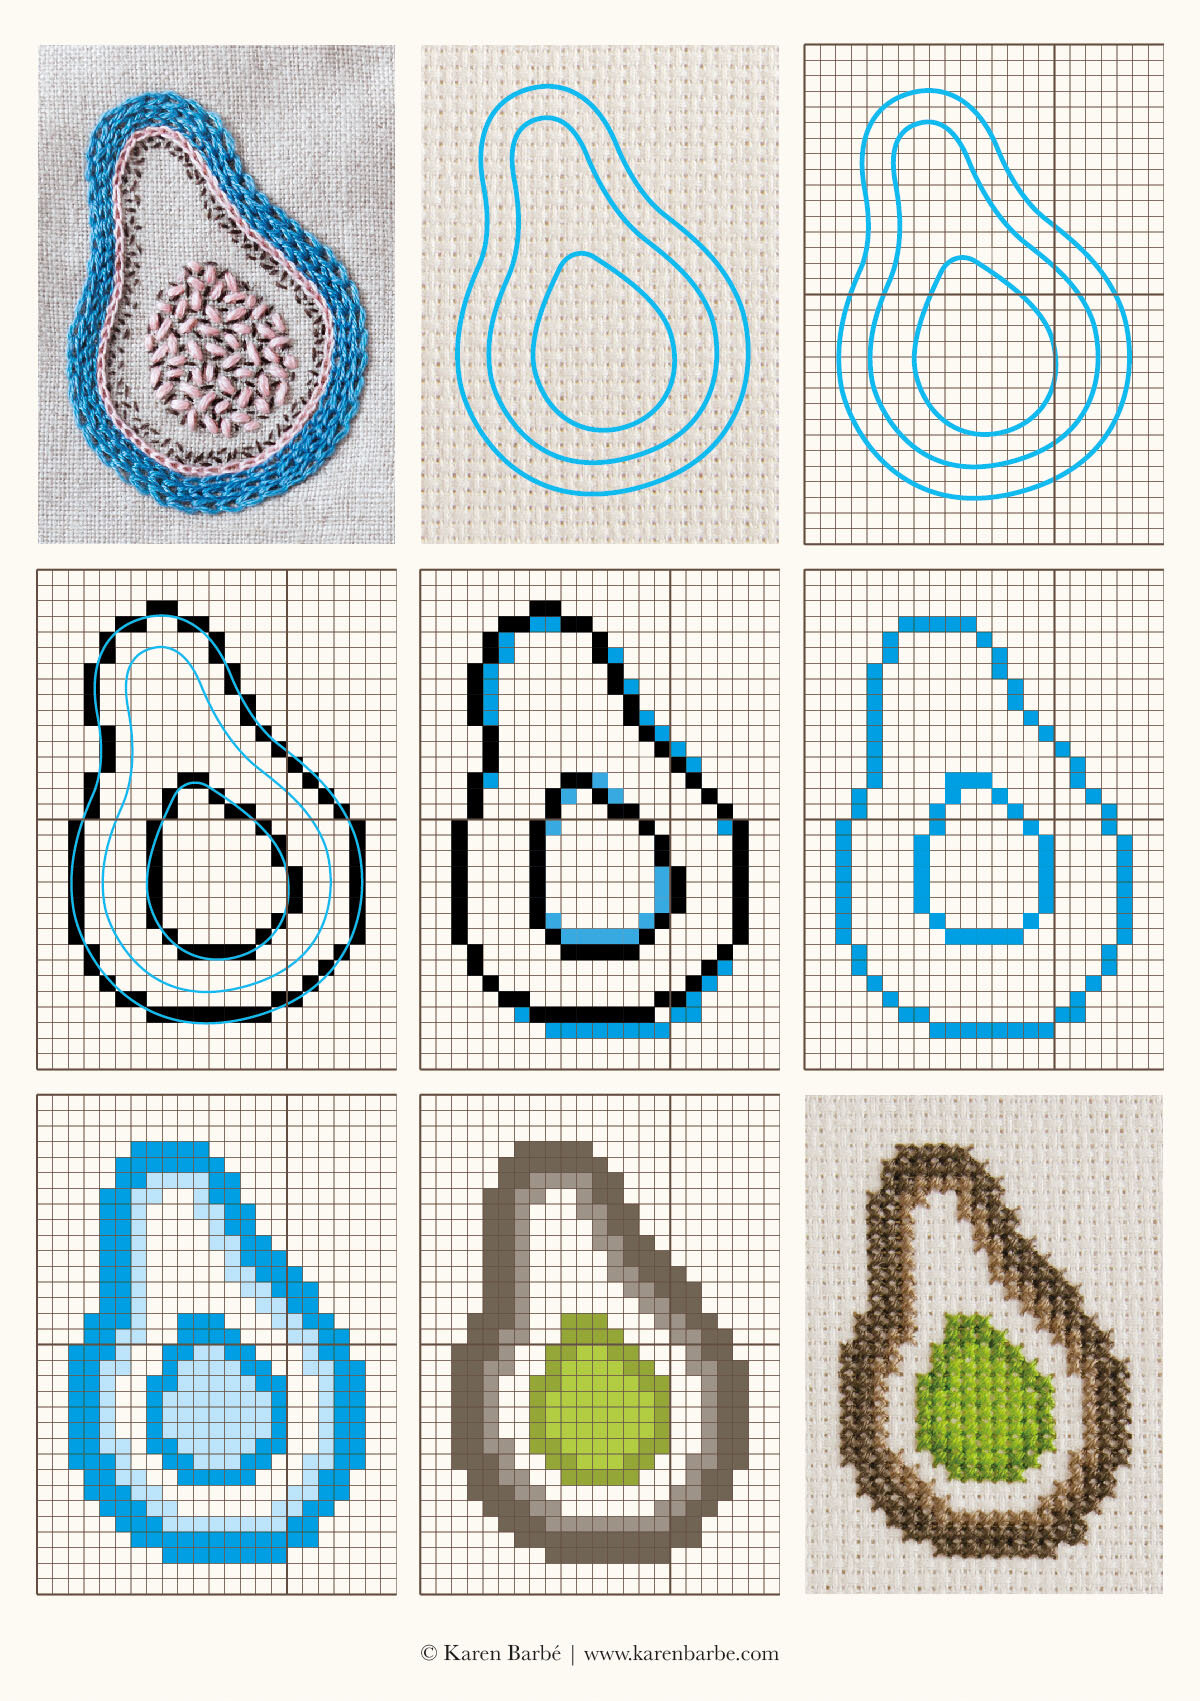 How to Create Custom Cross-stitch Patterns